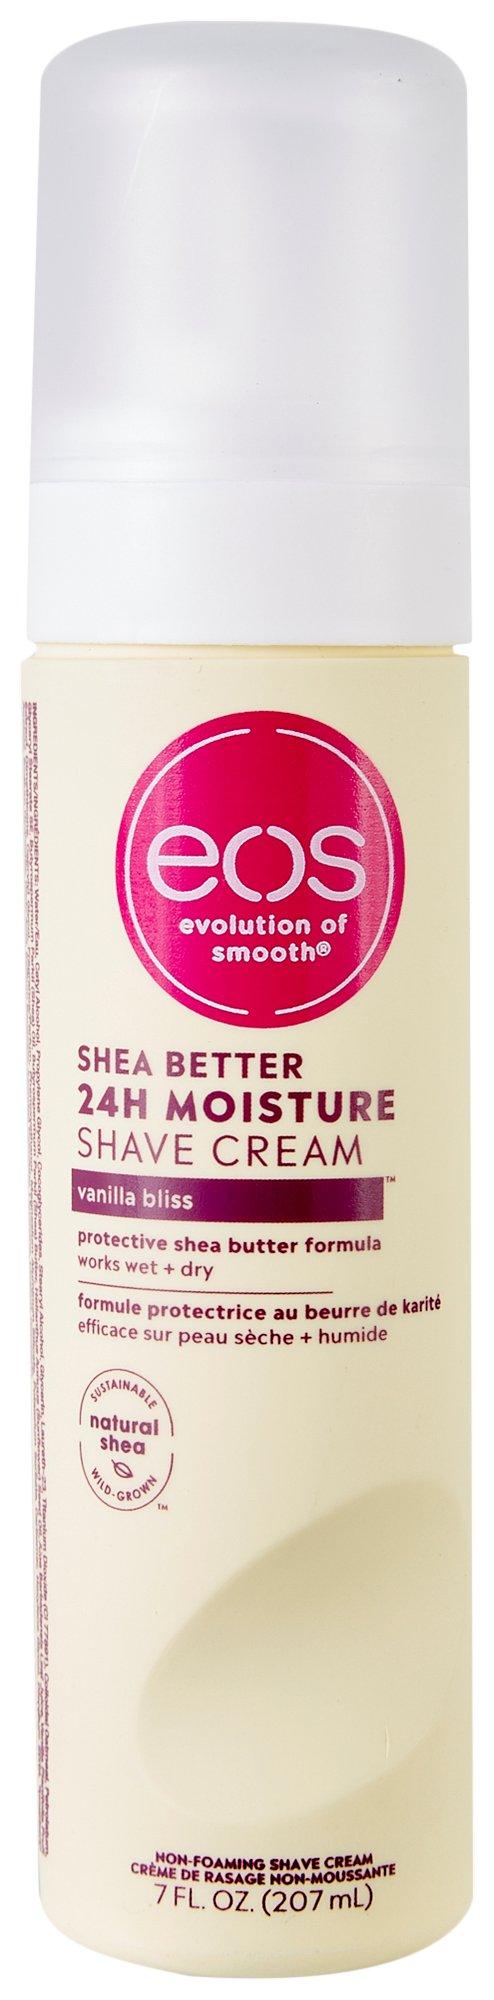 EOS Shea Better Vanilla Bliss 24-Hour Moisture Shave